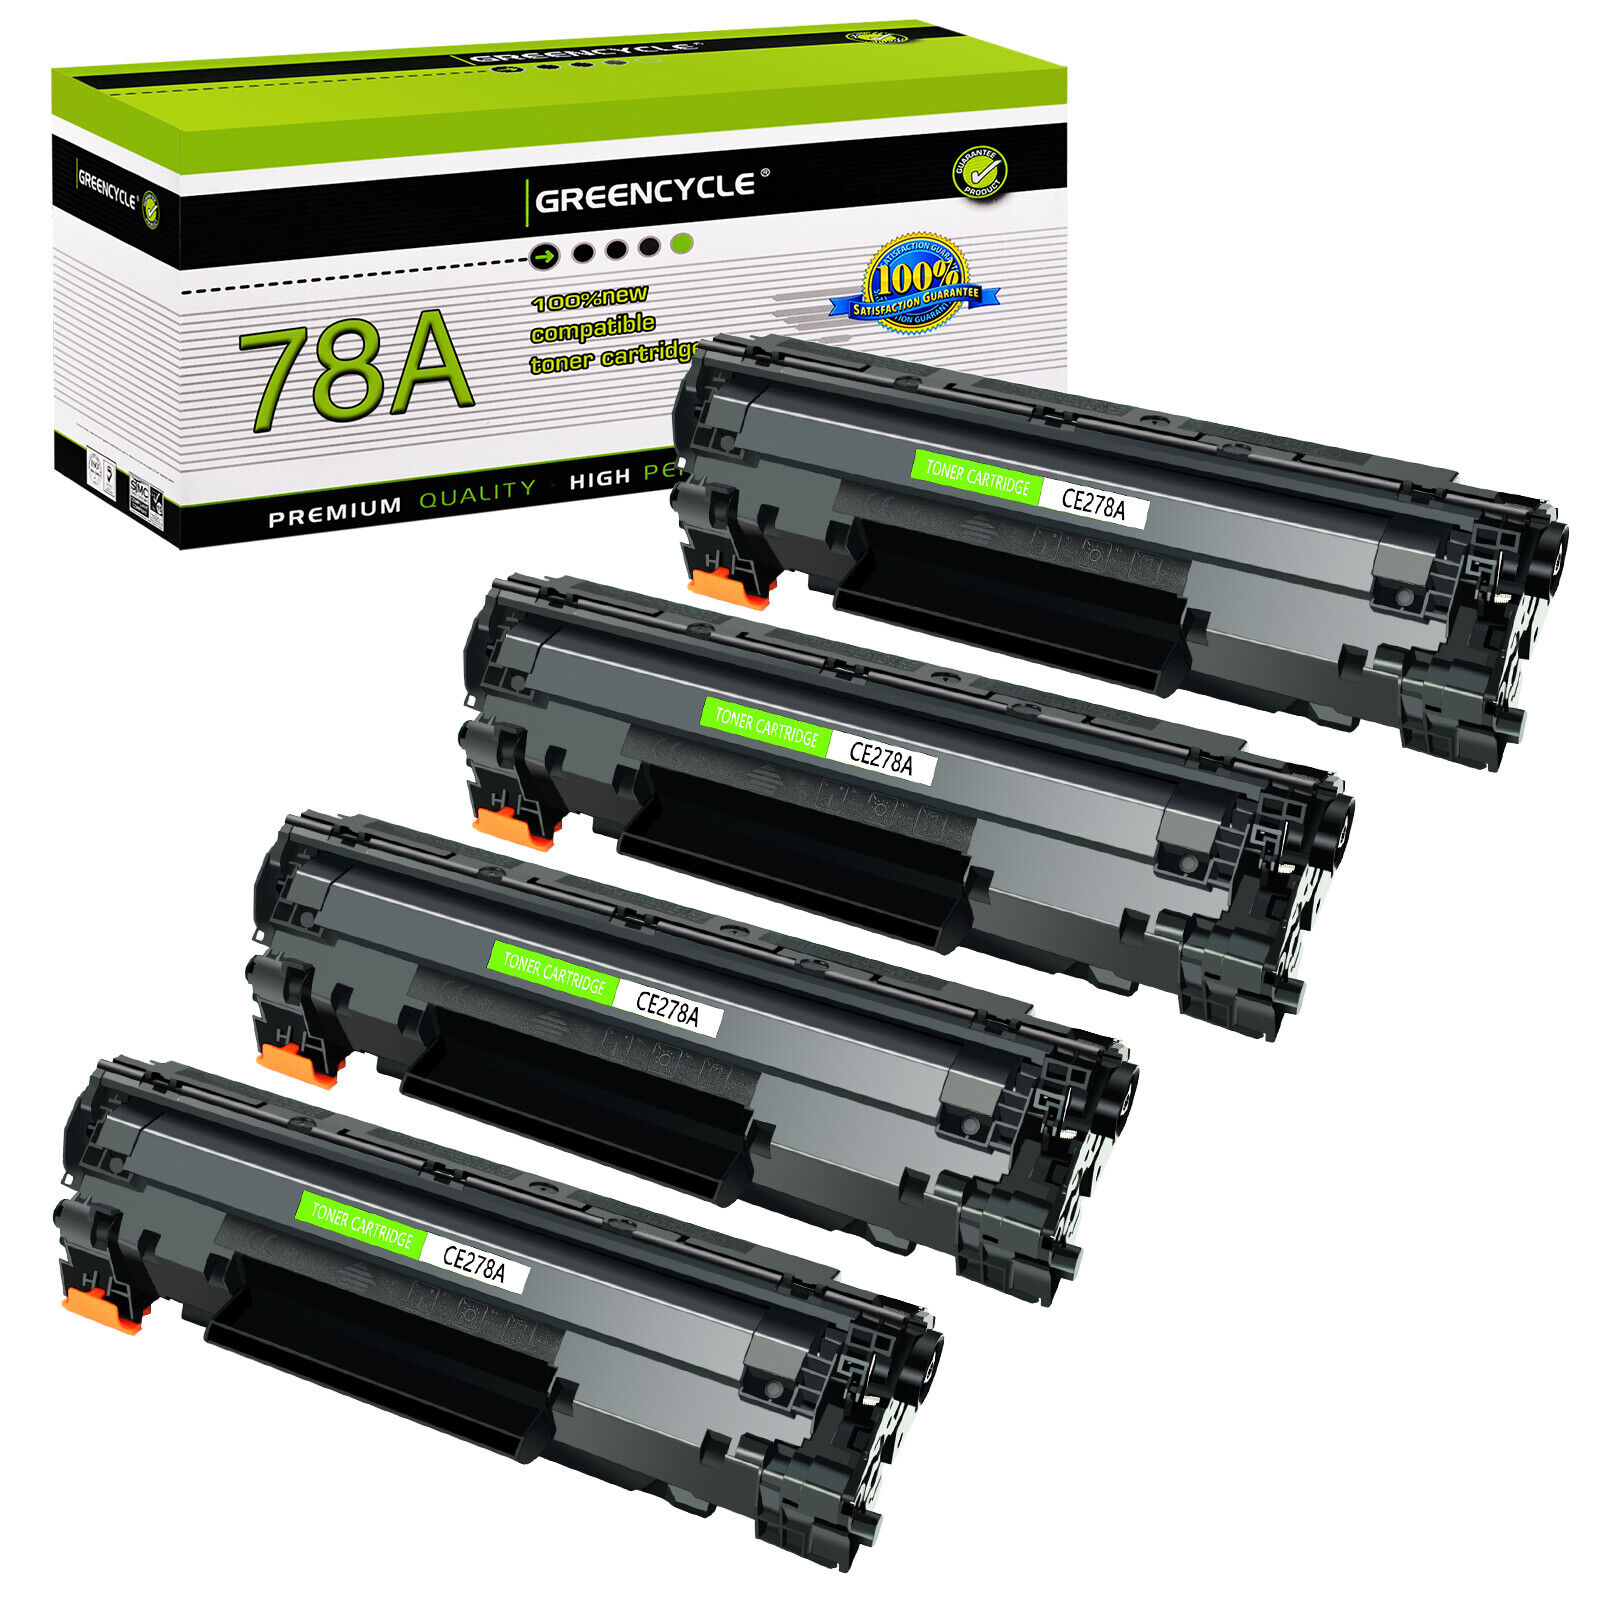 4x CE278A Toner For HP 78A LaserJet Pro P1606dn 1536dnf MFP P1606 M1536dnf M1536